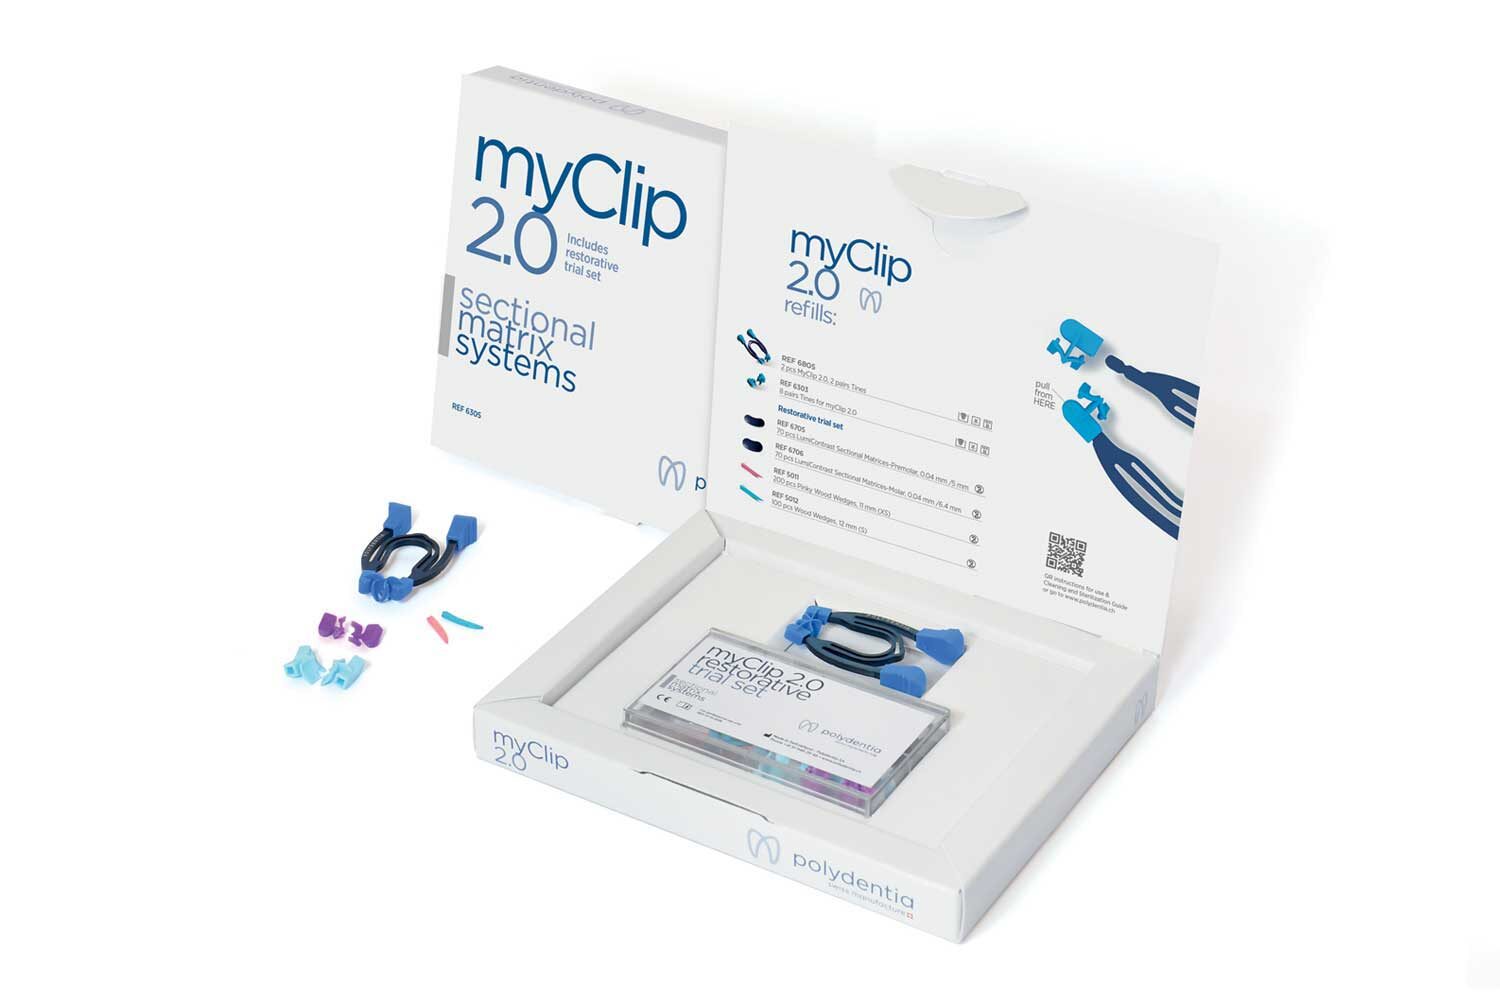 myClip 2.0 sistema de matrices seccionales odontologia conservadora